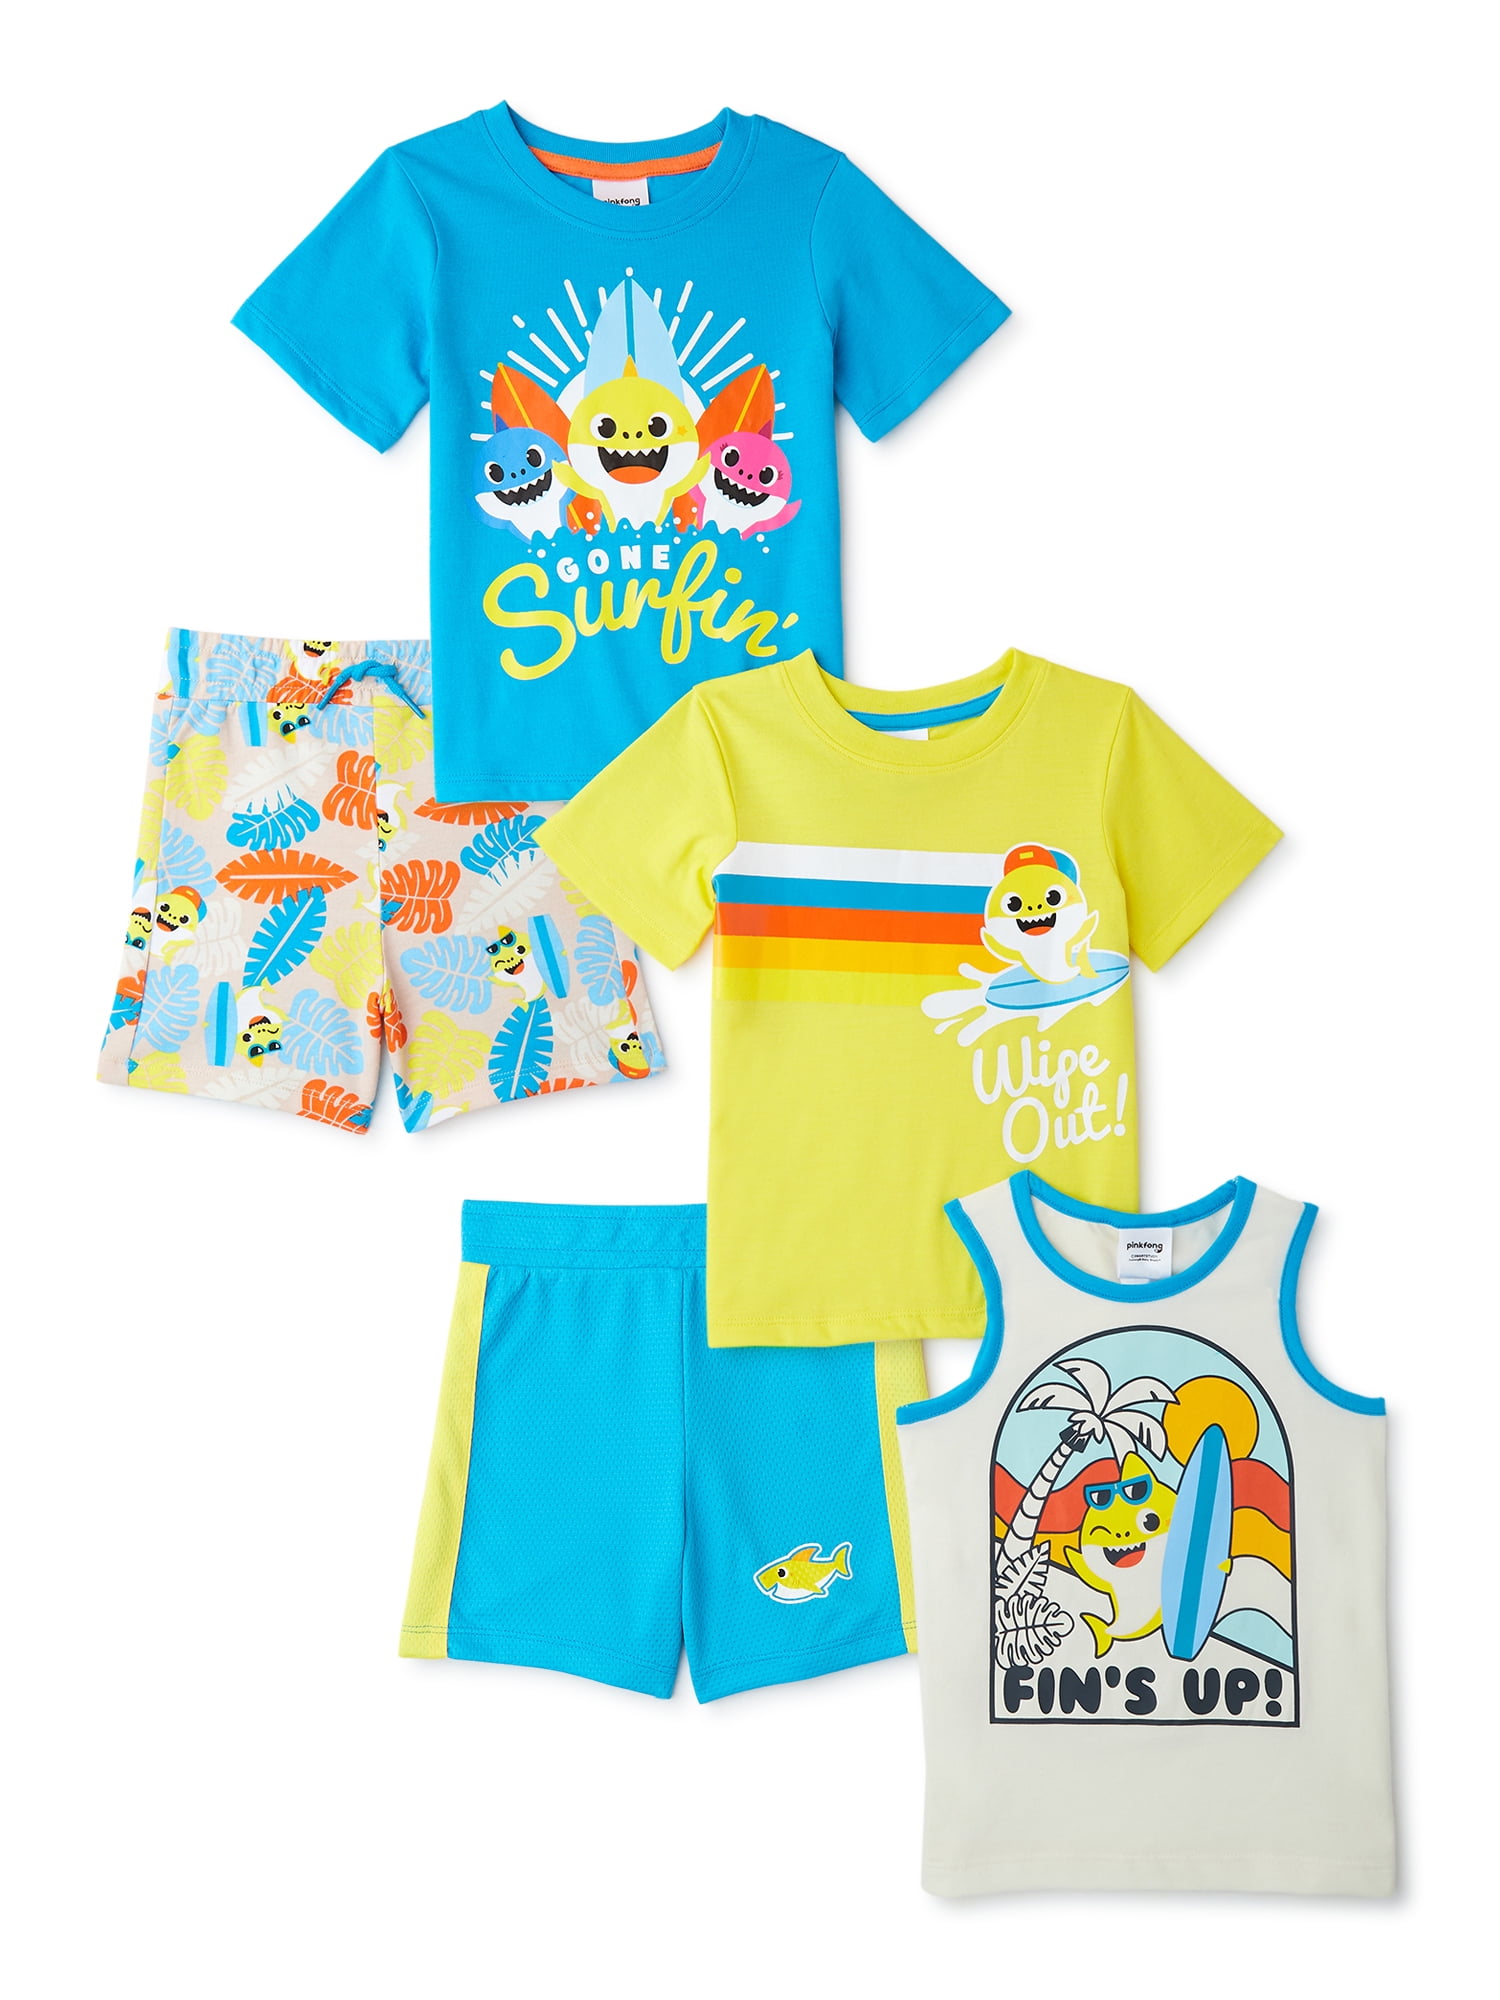 Baby Shark Toddler Boy 5-Piece Outfit Set, Sizes 12M-5T - Walmart.com